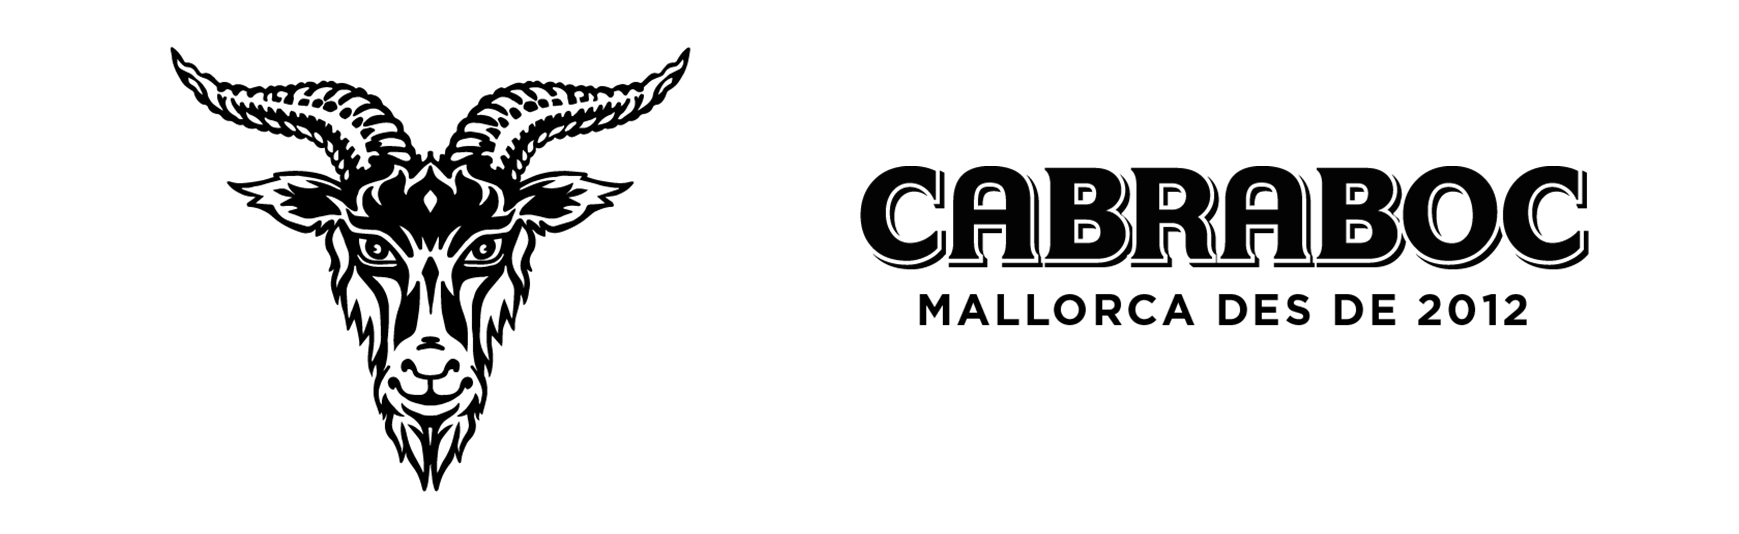 Bild des Cabraboc-Logos